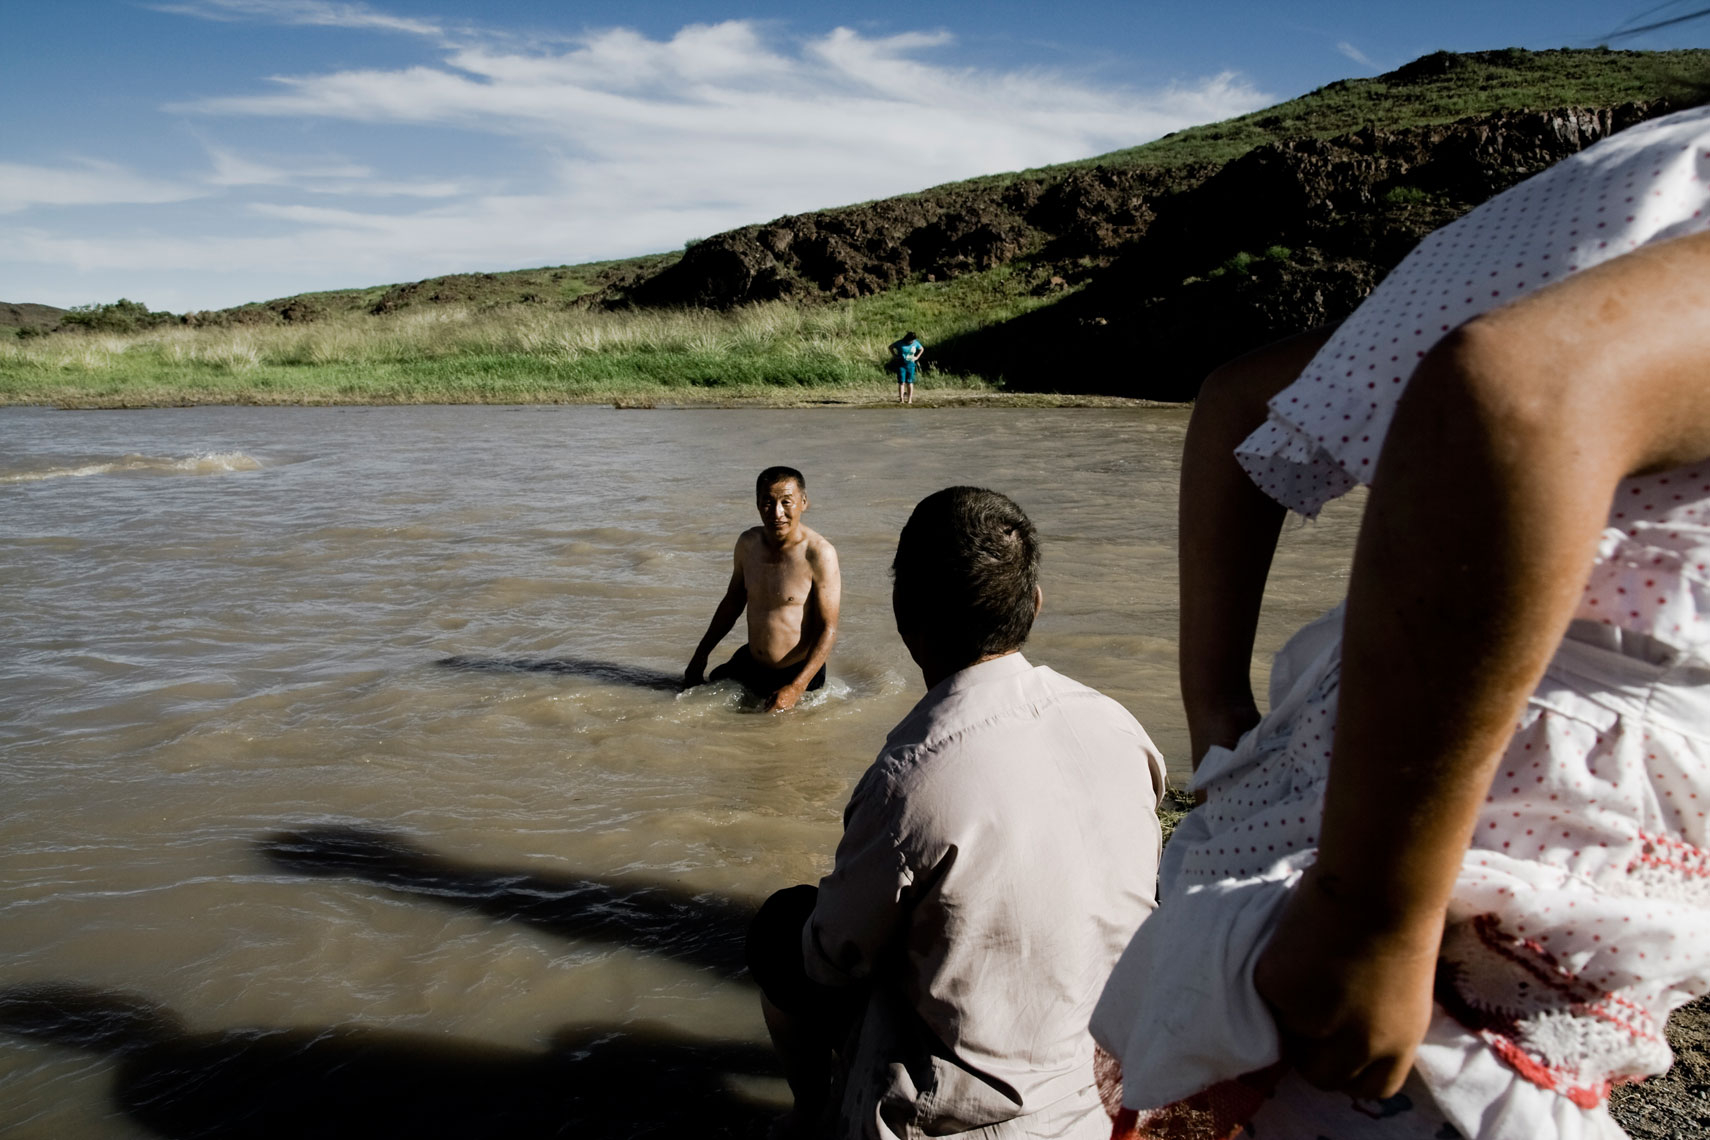 MONGOLIA,2012. Near Ongiin Khiid monastery. Some people enjoy a swim in the Ongi gol river.